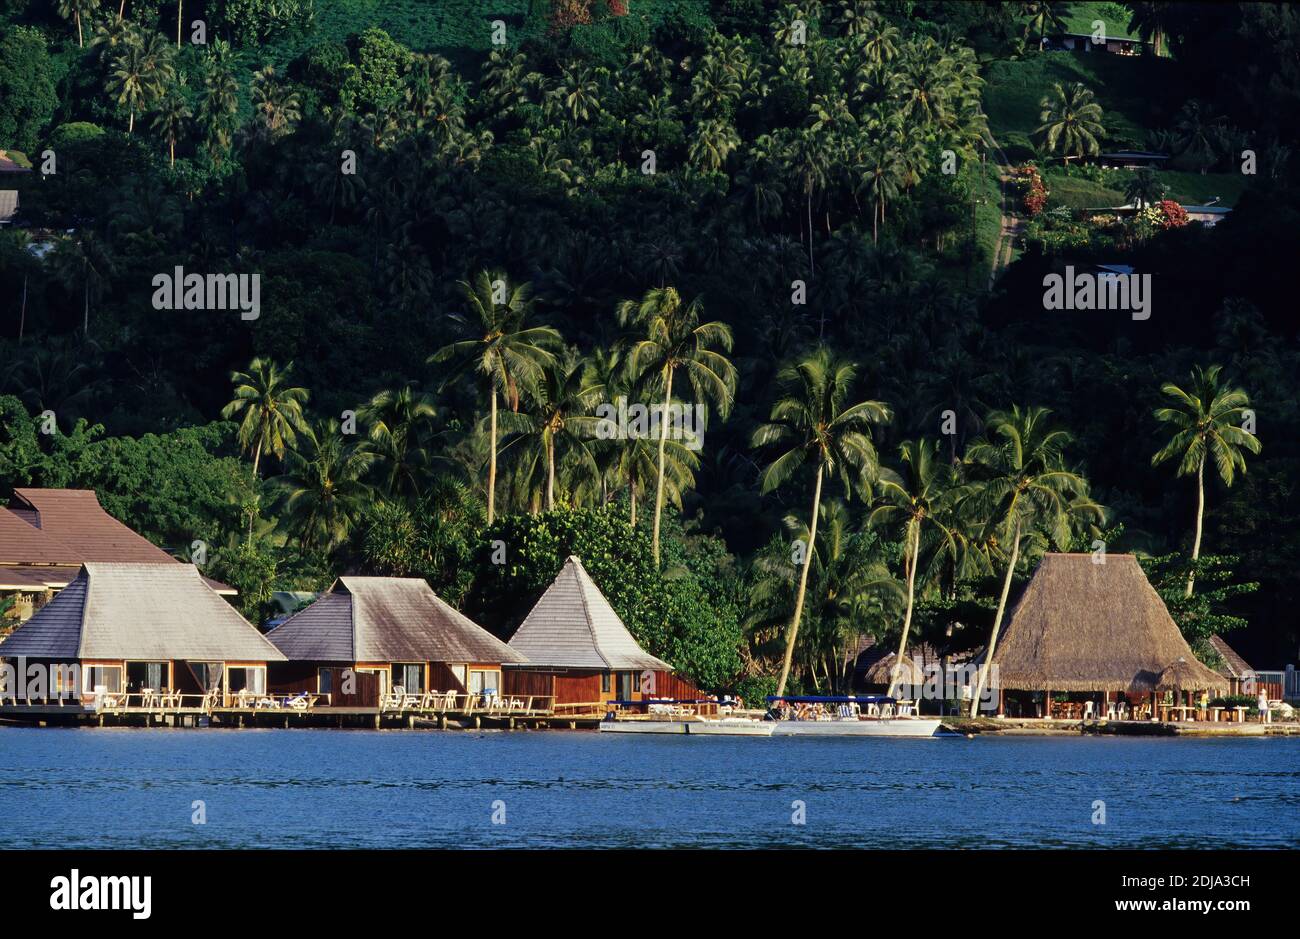 Cook's Bay, Hotel Club Bali Hai, MOOREA, Society Islands, French Polynesia  Stock Photo - Alamy